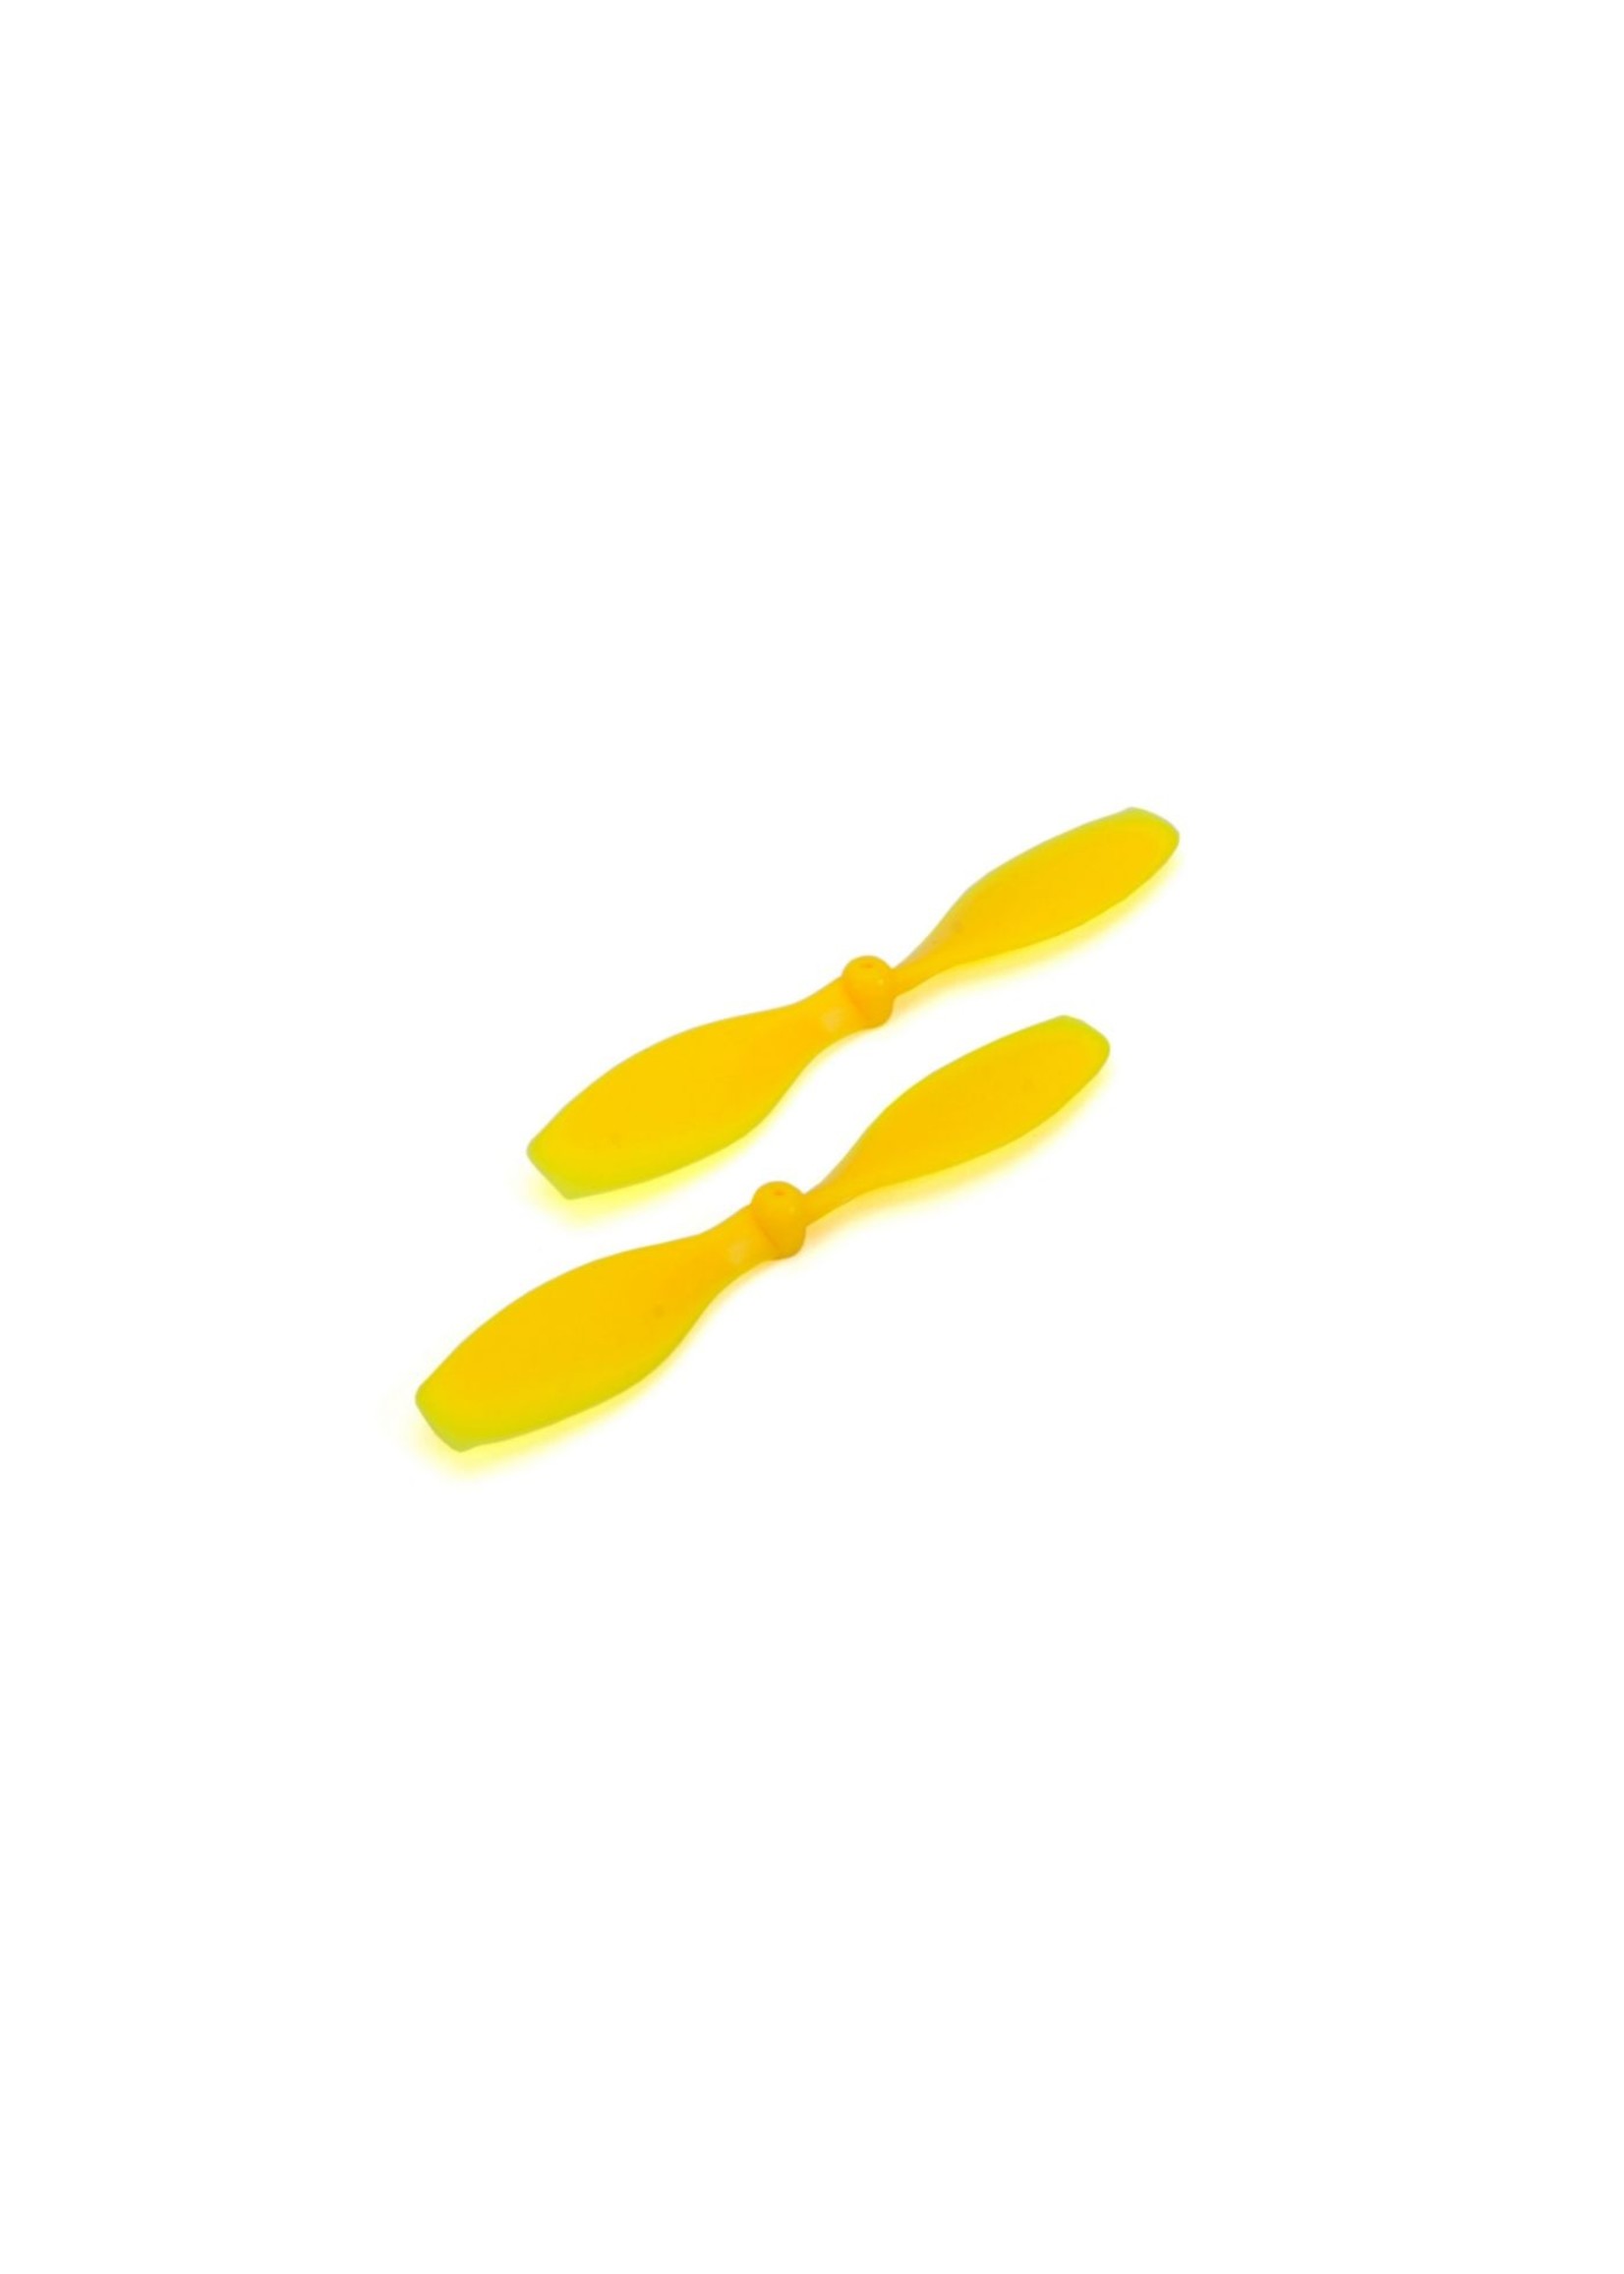 Blade 7620Y - Prop, Clockwise Rotation, Yellow (2): Nano QX